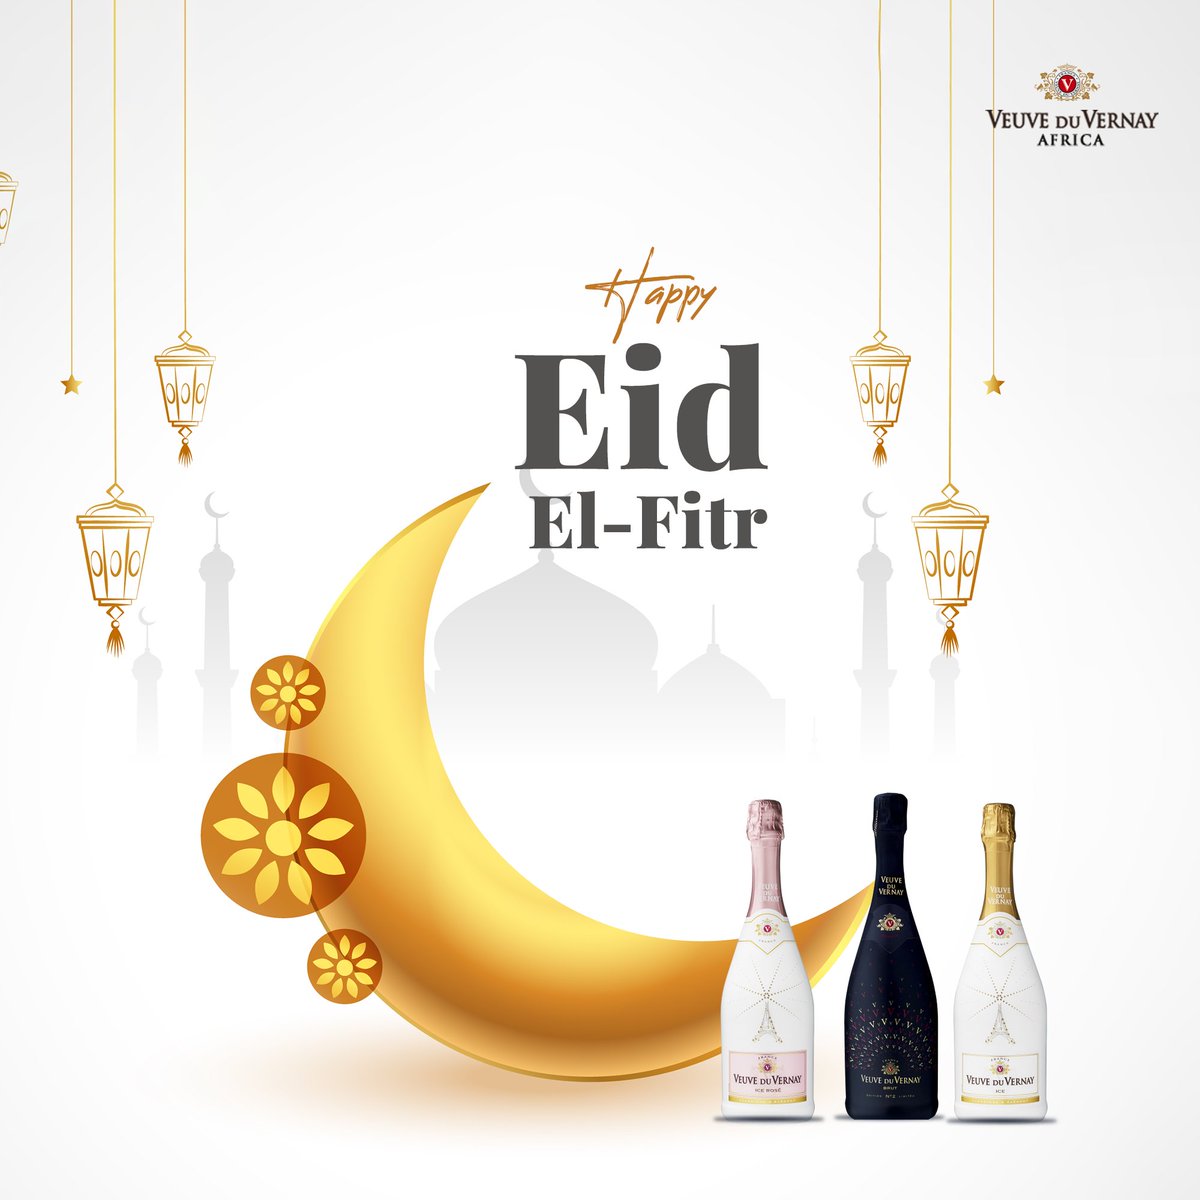 May the light of Eid illuminate your path, bringing peace, harmony, and endless blessings. 

Eid Mubarak from all of us at Veuve Du Vernay Africa.

 #EidElFitr #BarkaDaSallah #VeuveDuVernay #ATasteOfFrance